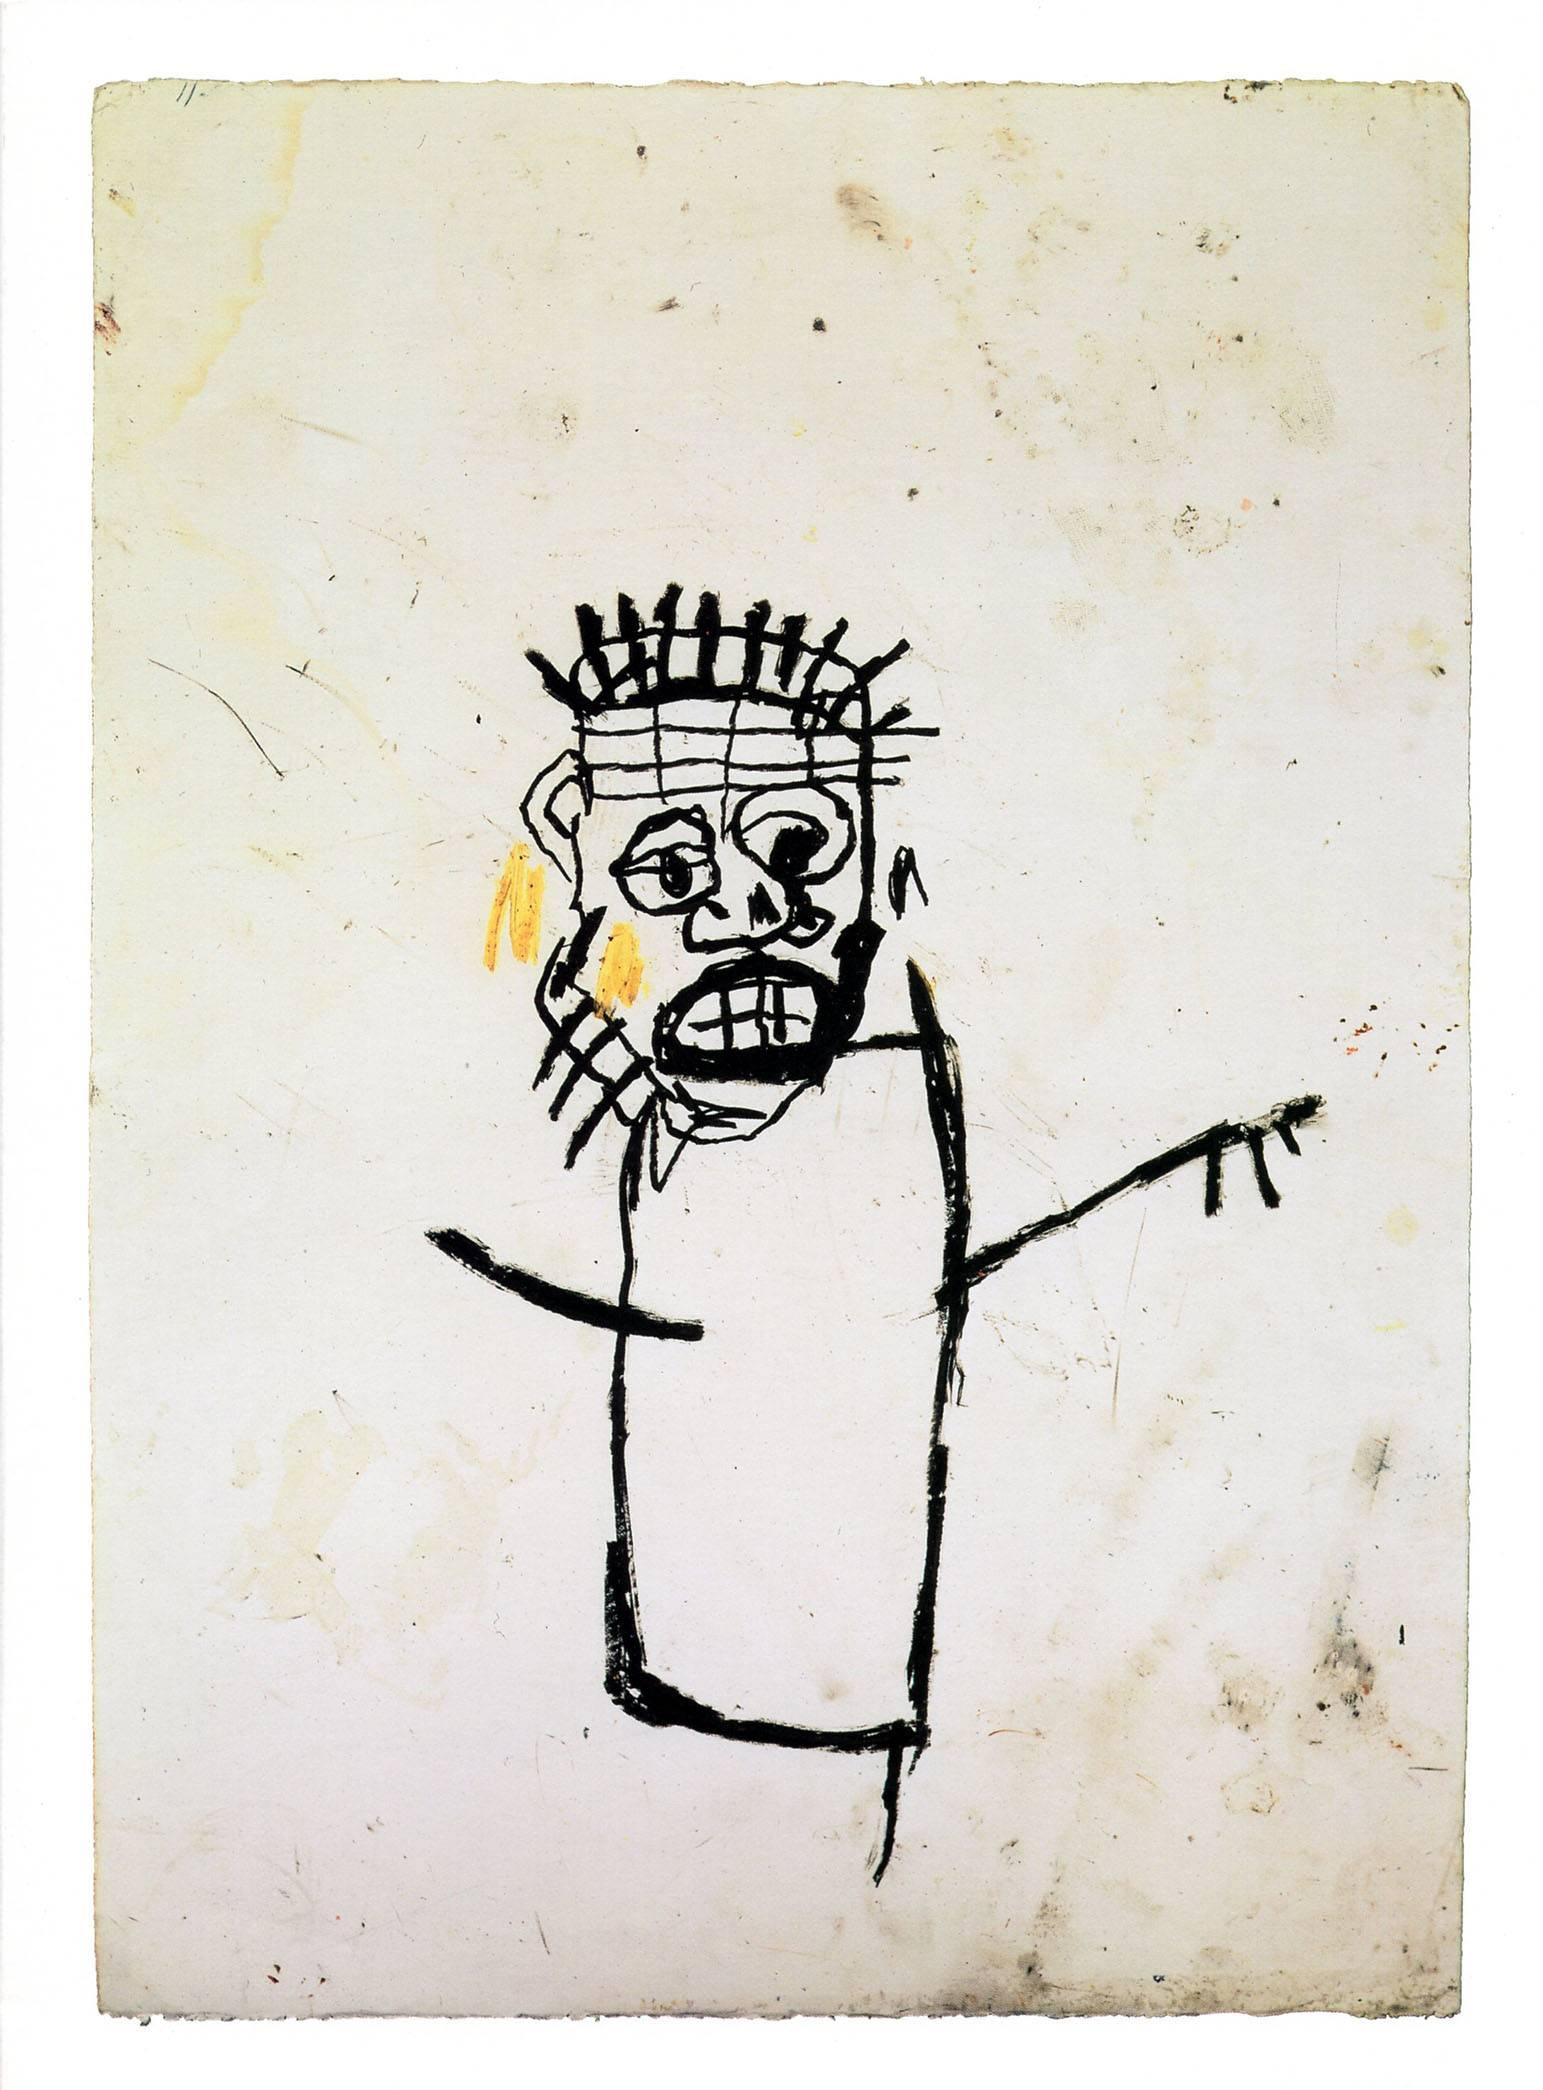 Basquiat at Robert Miller Gallery New York 1990 (vintage Basquiat announcement)) - Print by after Jean-Michel Basquiat